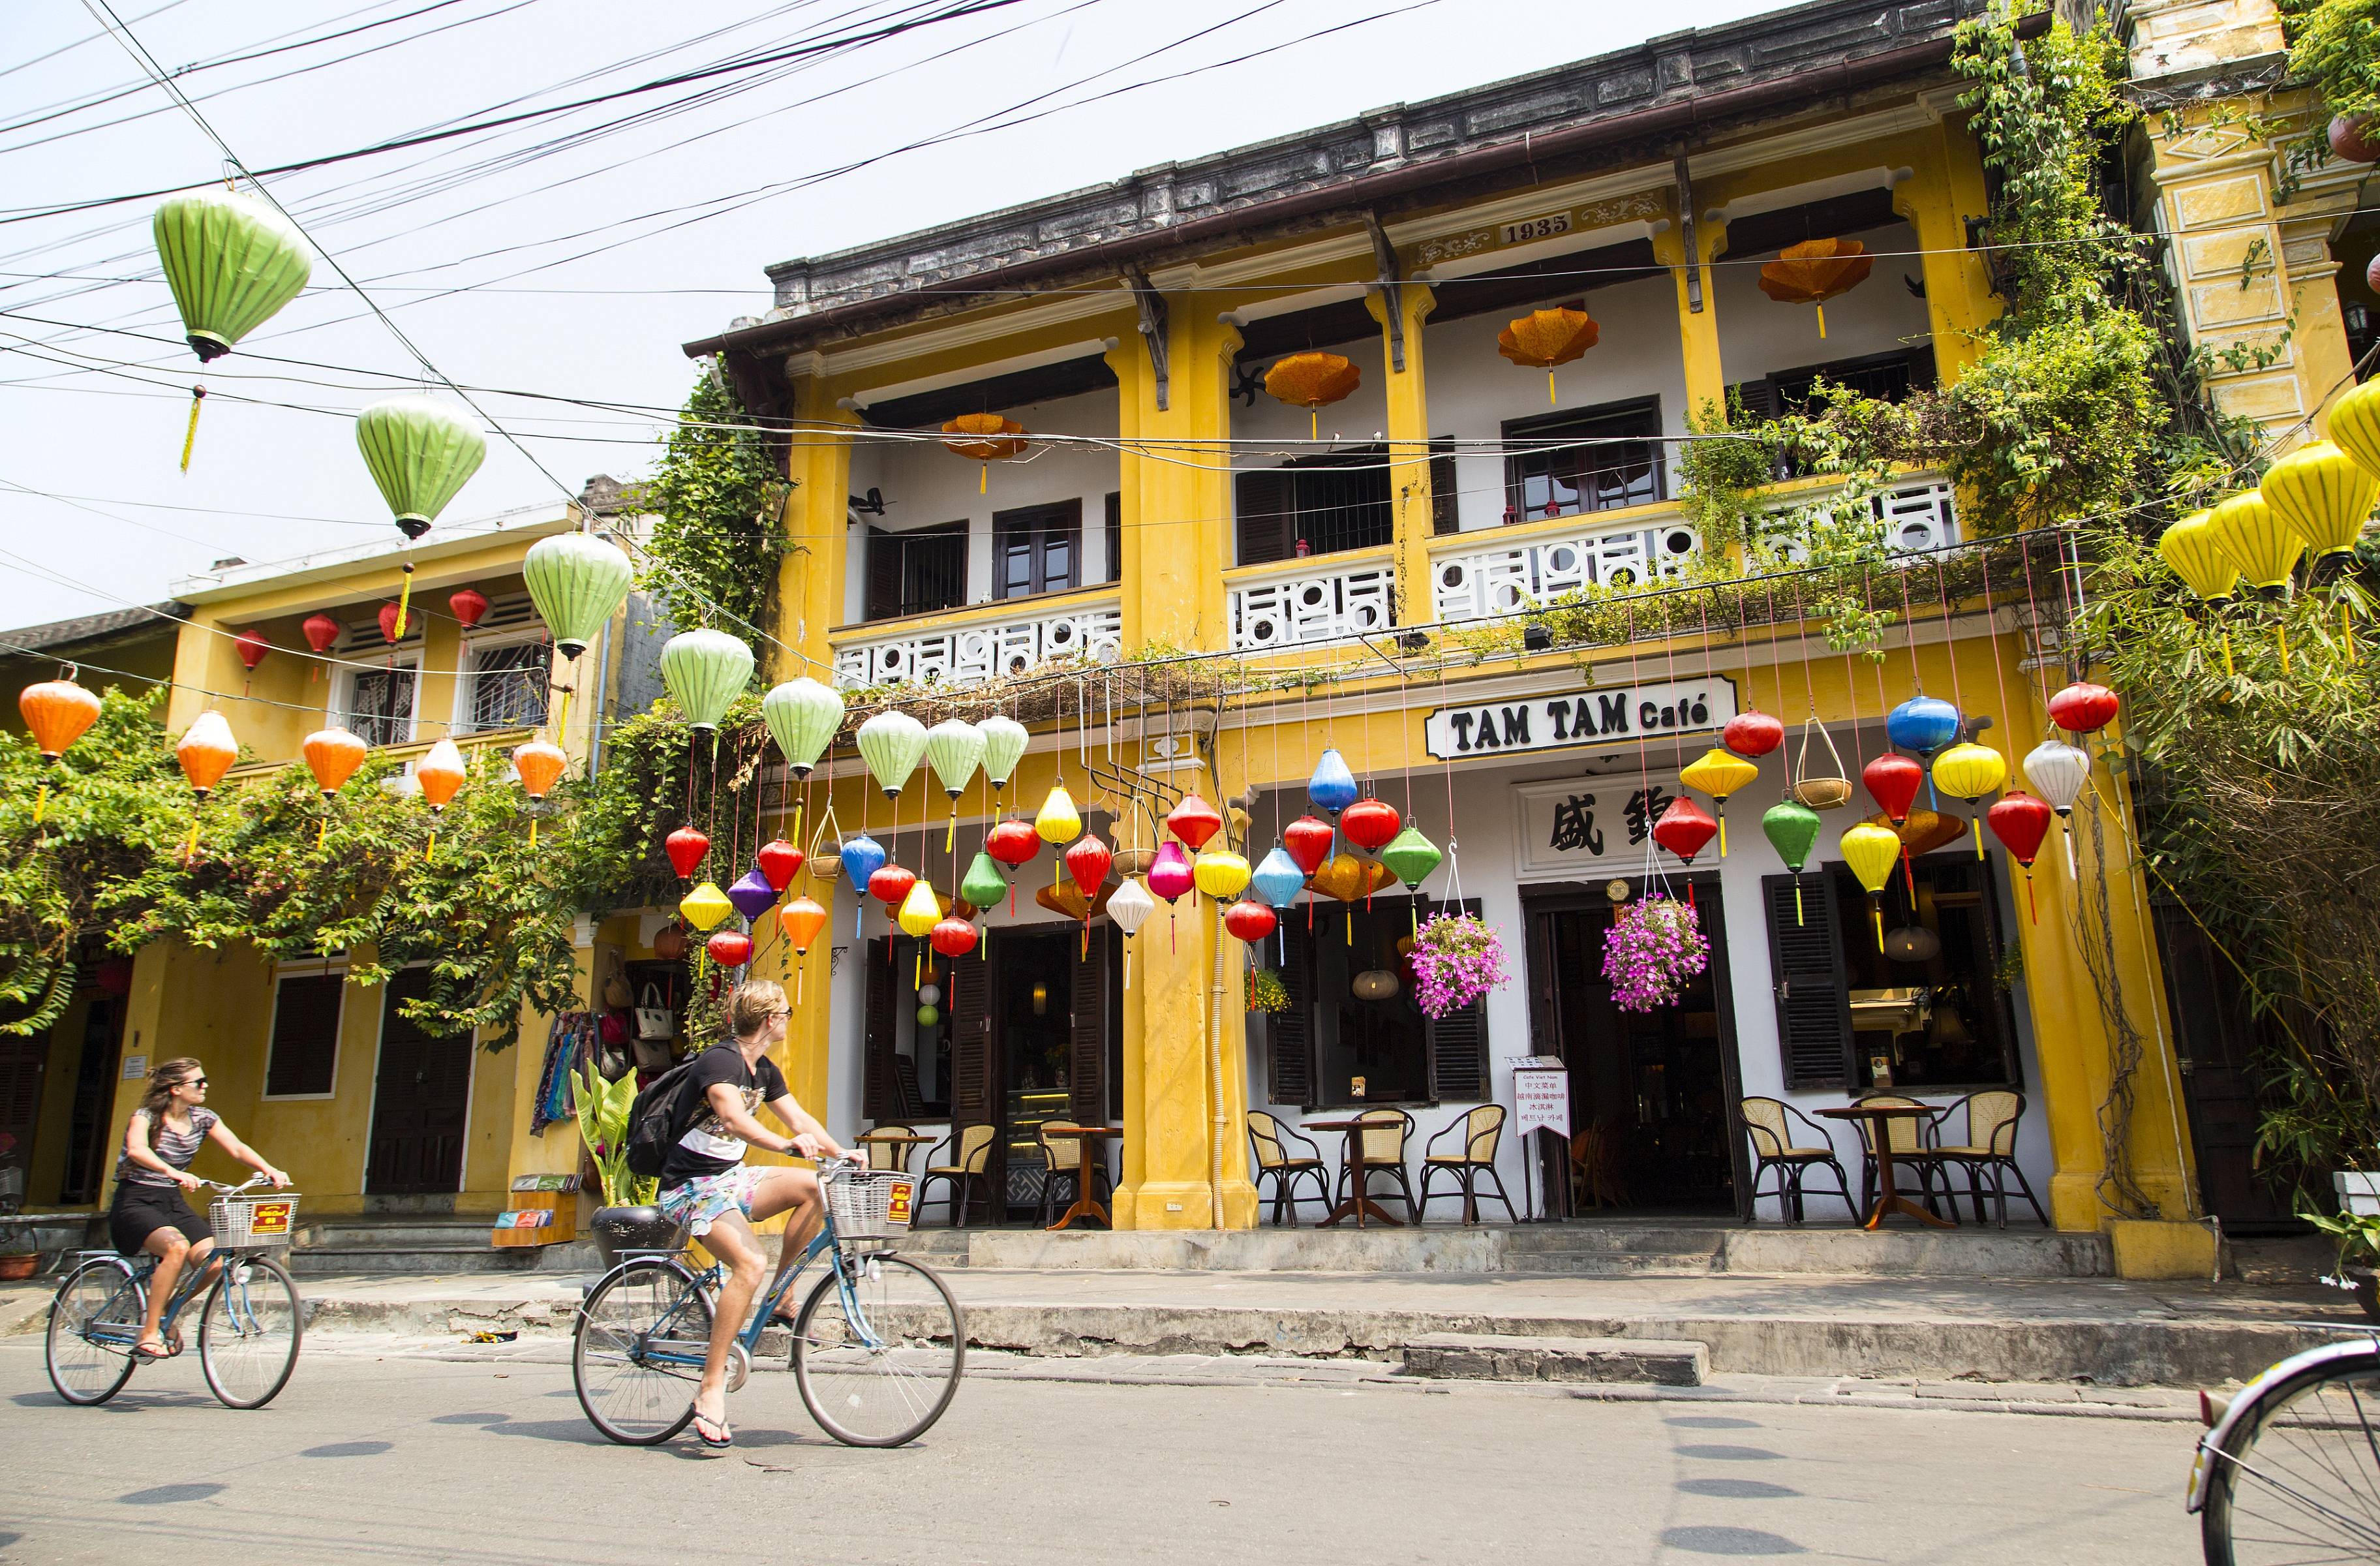 Descubrir las afueras de Hoi An en bicicleta